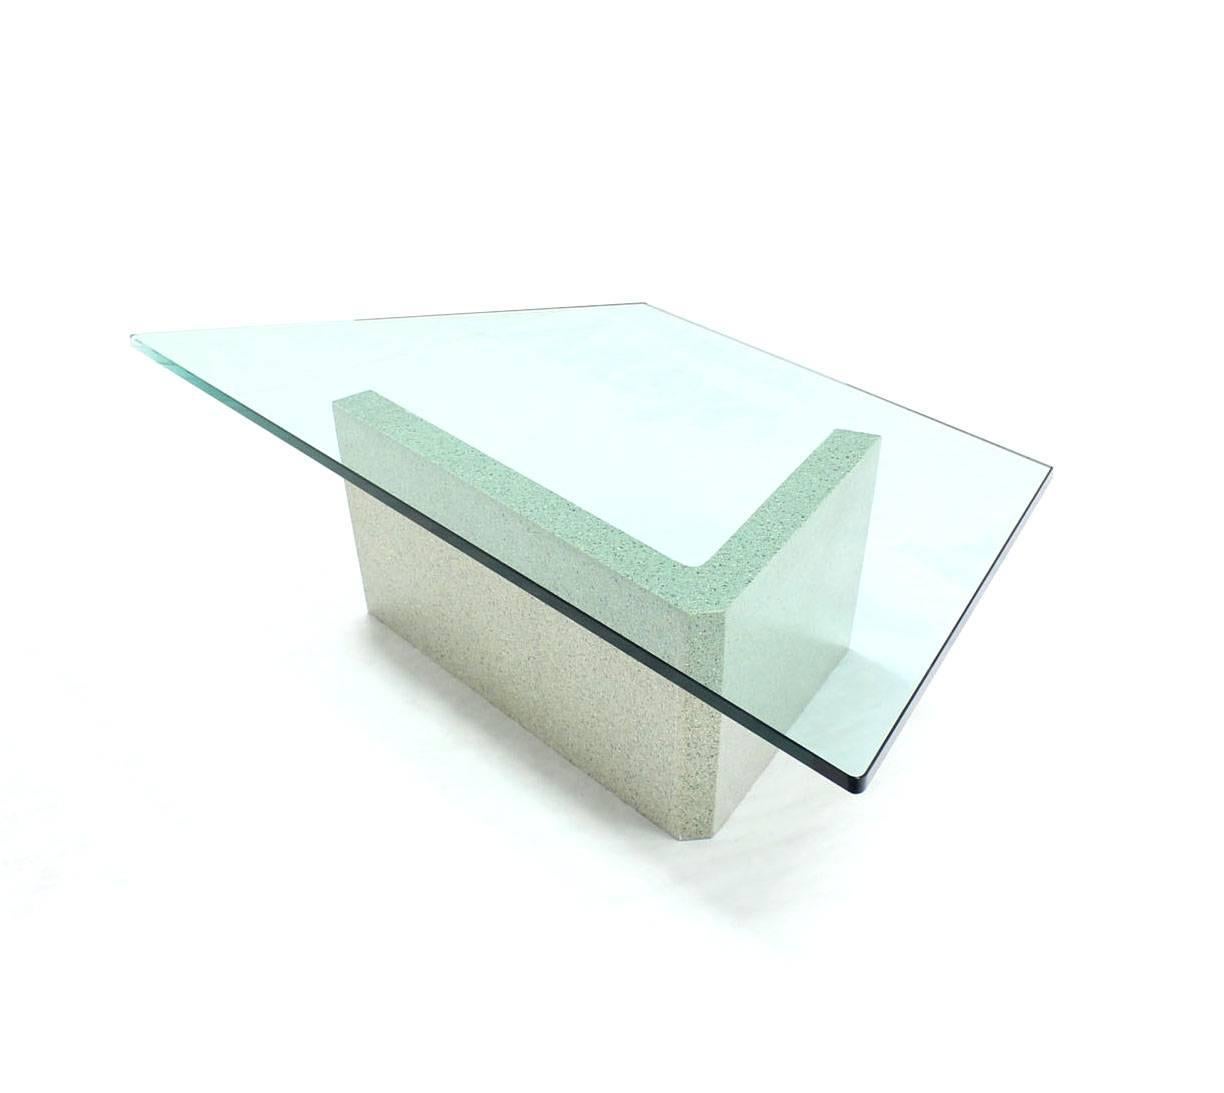 Unusual irregular shape glass top mid century modern coffee table.